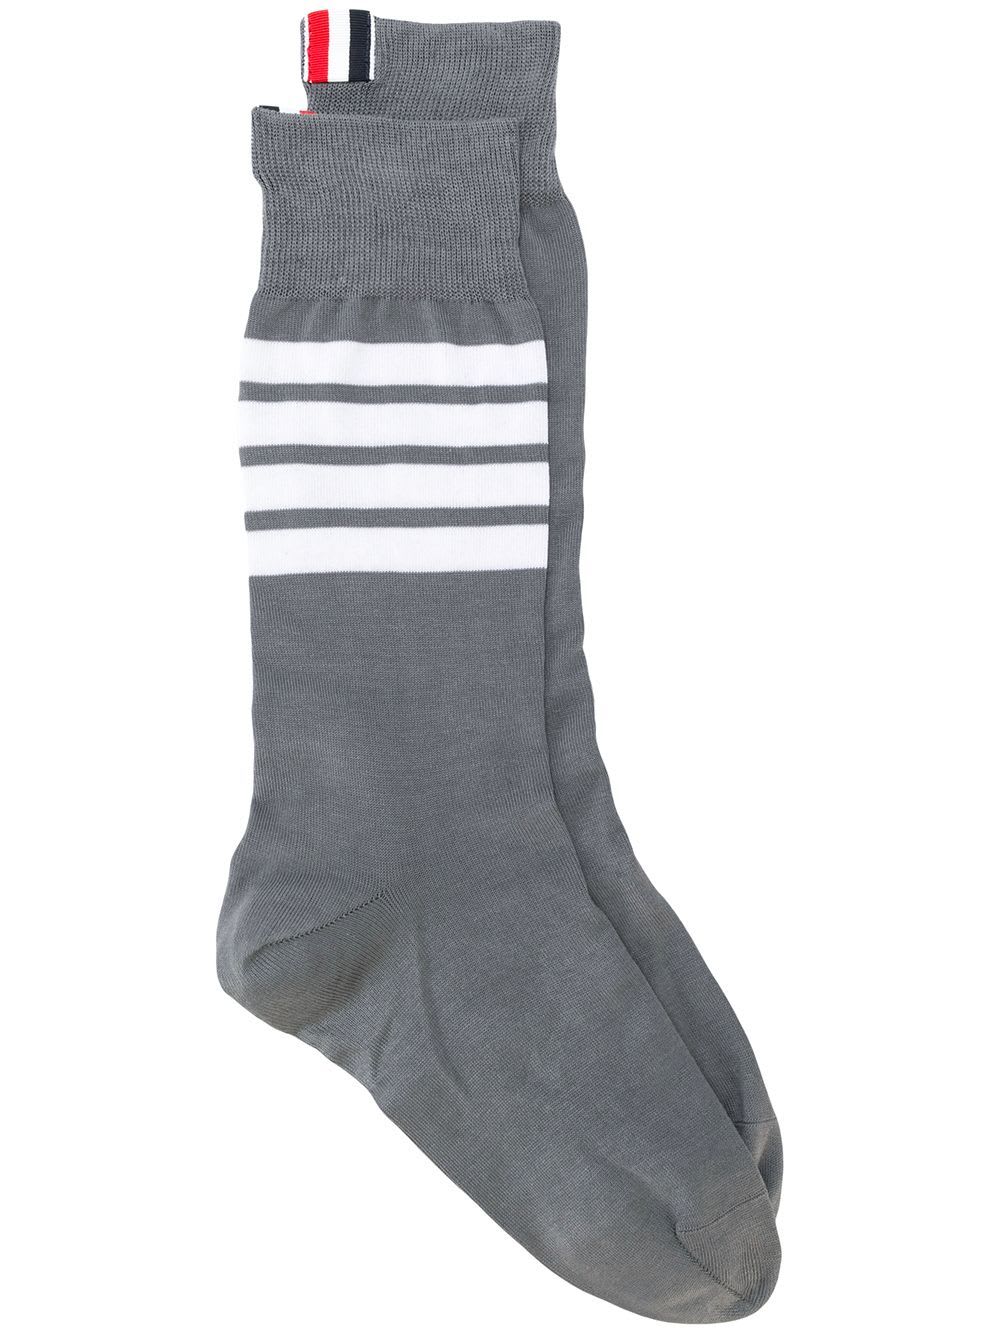 Mid Calf Socks With 4 Bar